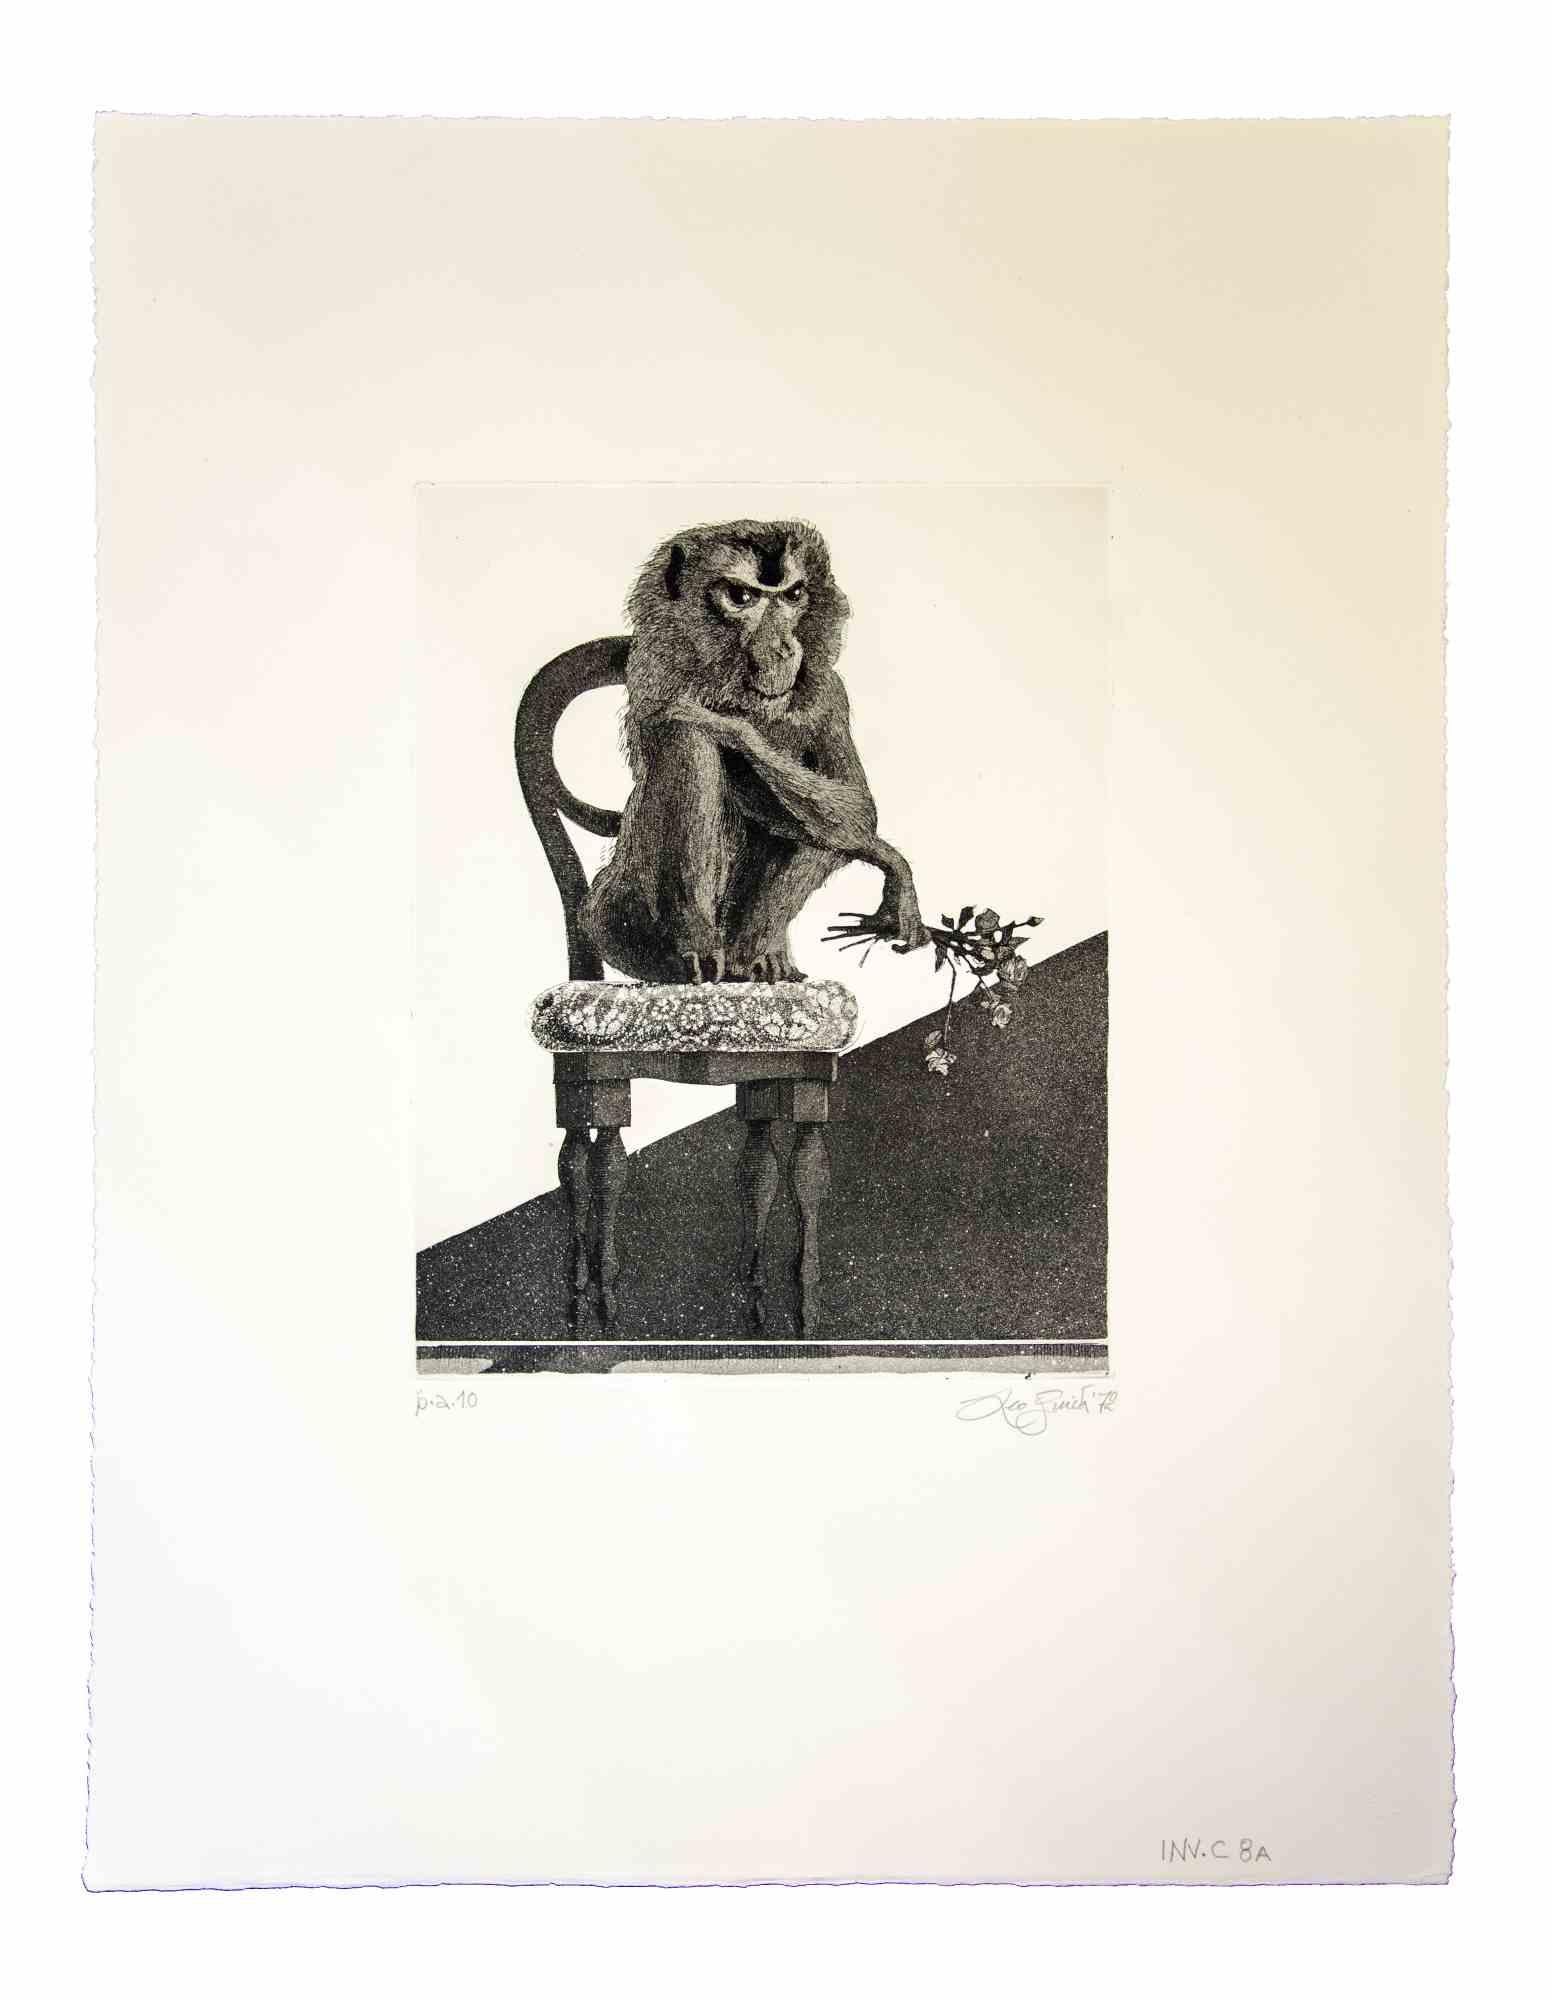 The Monkey - Original Etching by Leo Guida - 1972